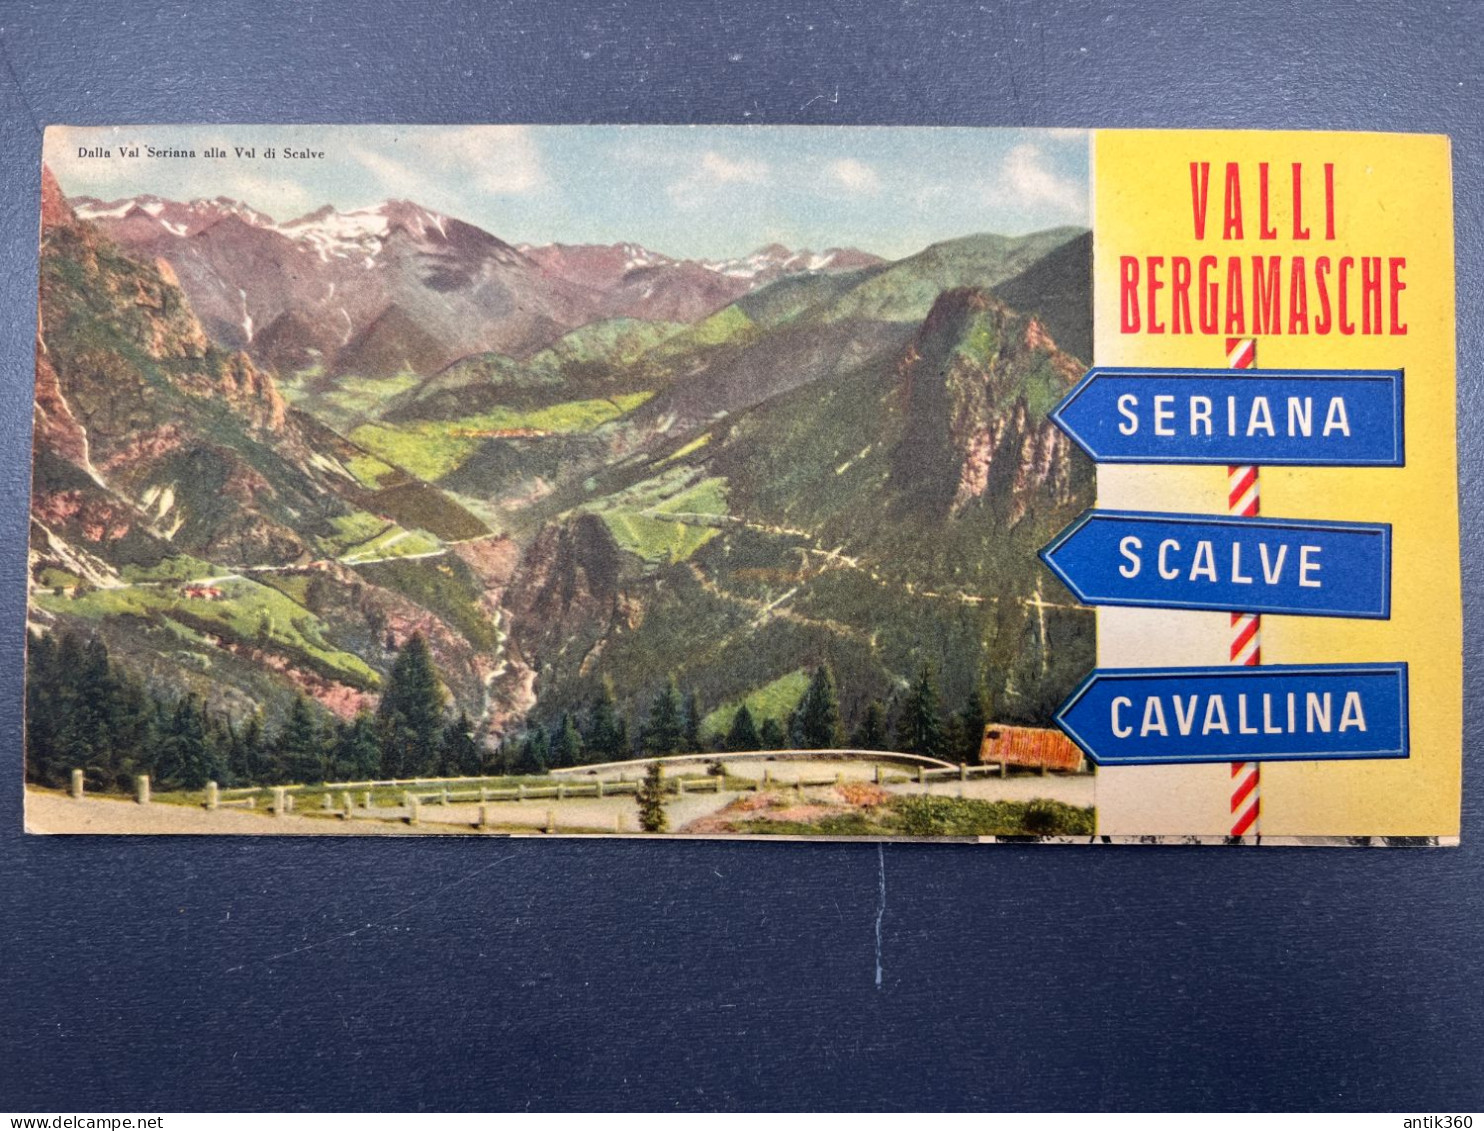 Ancien Dépliant Touristique Pop-Up Valli Bergamasche Seriana Scalve Cavallina Italie - Tourism Brochures